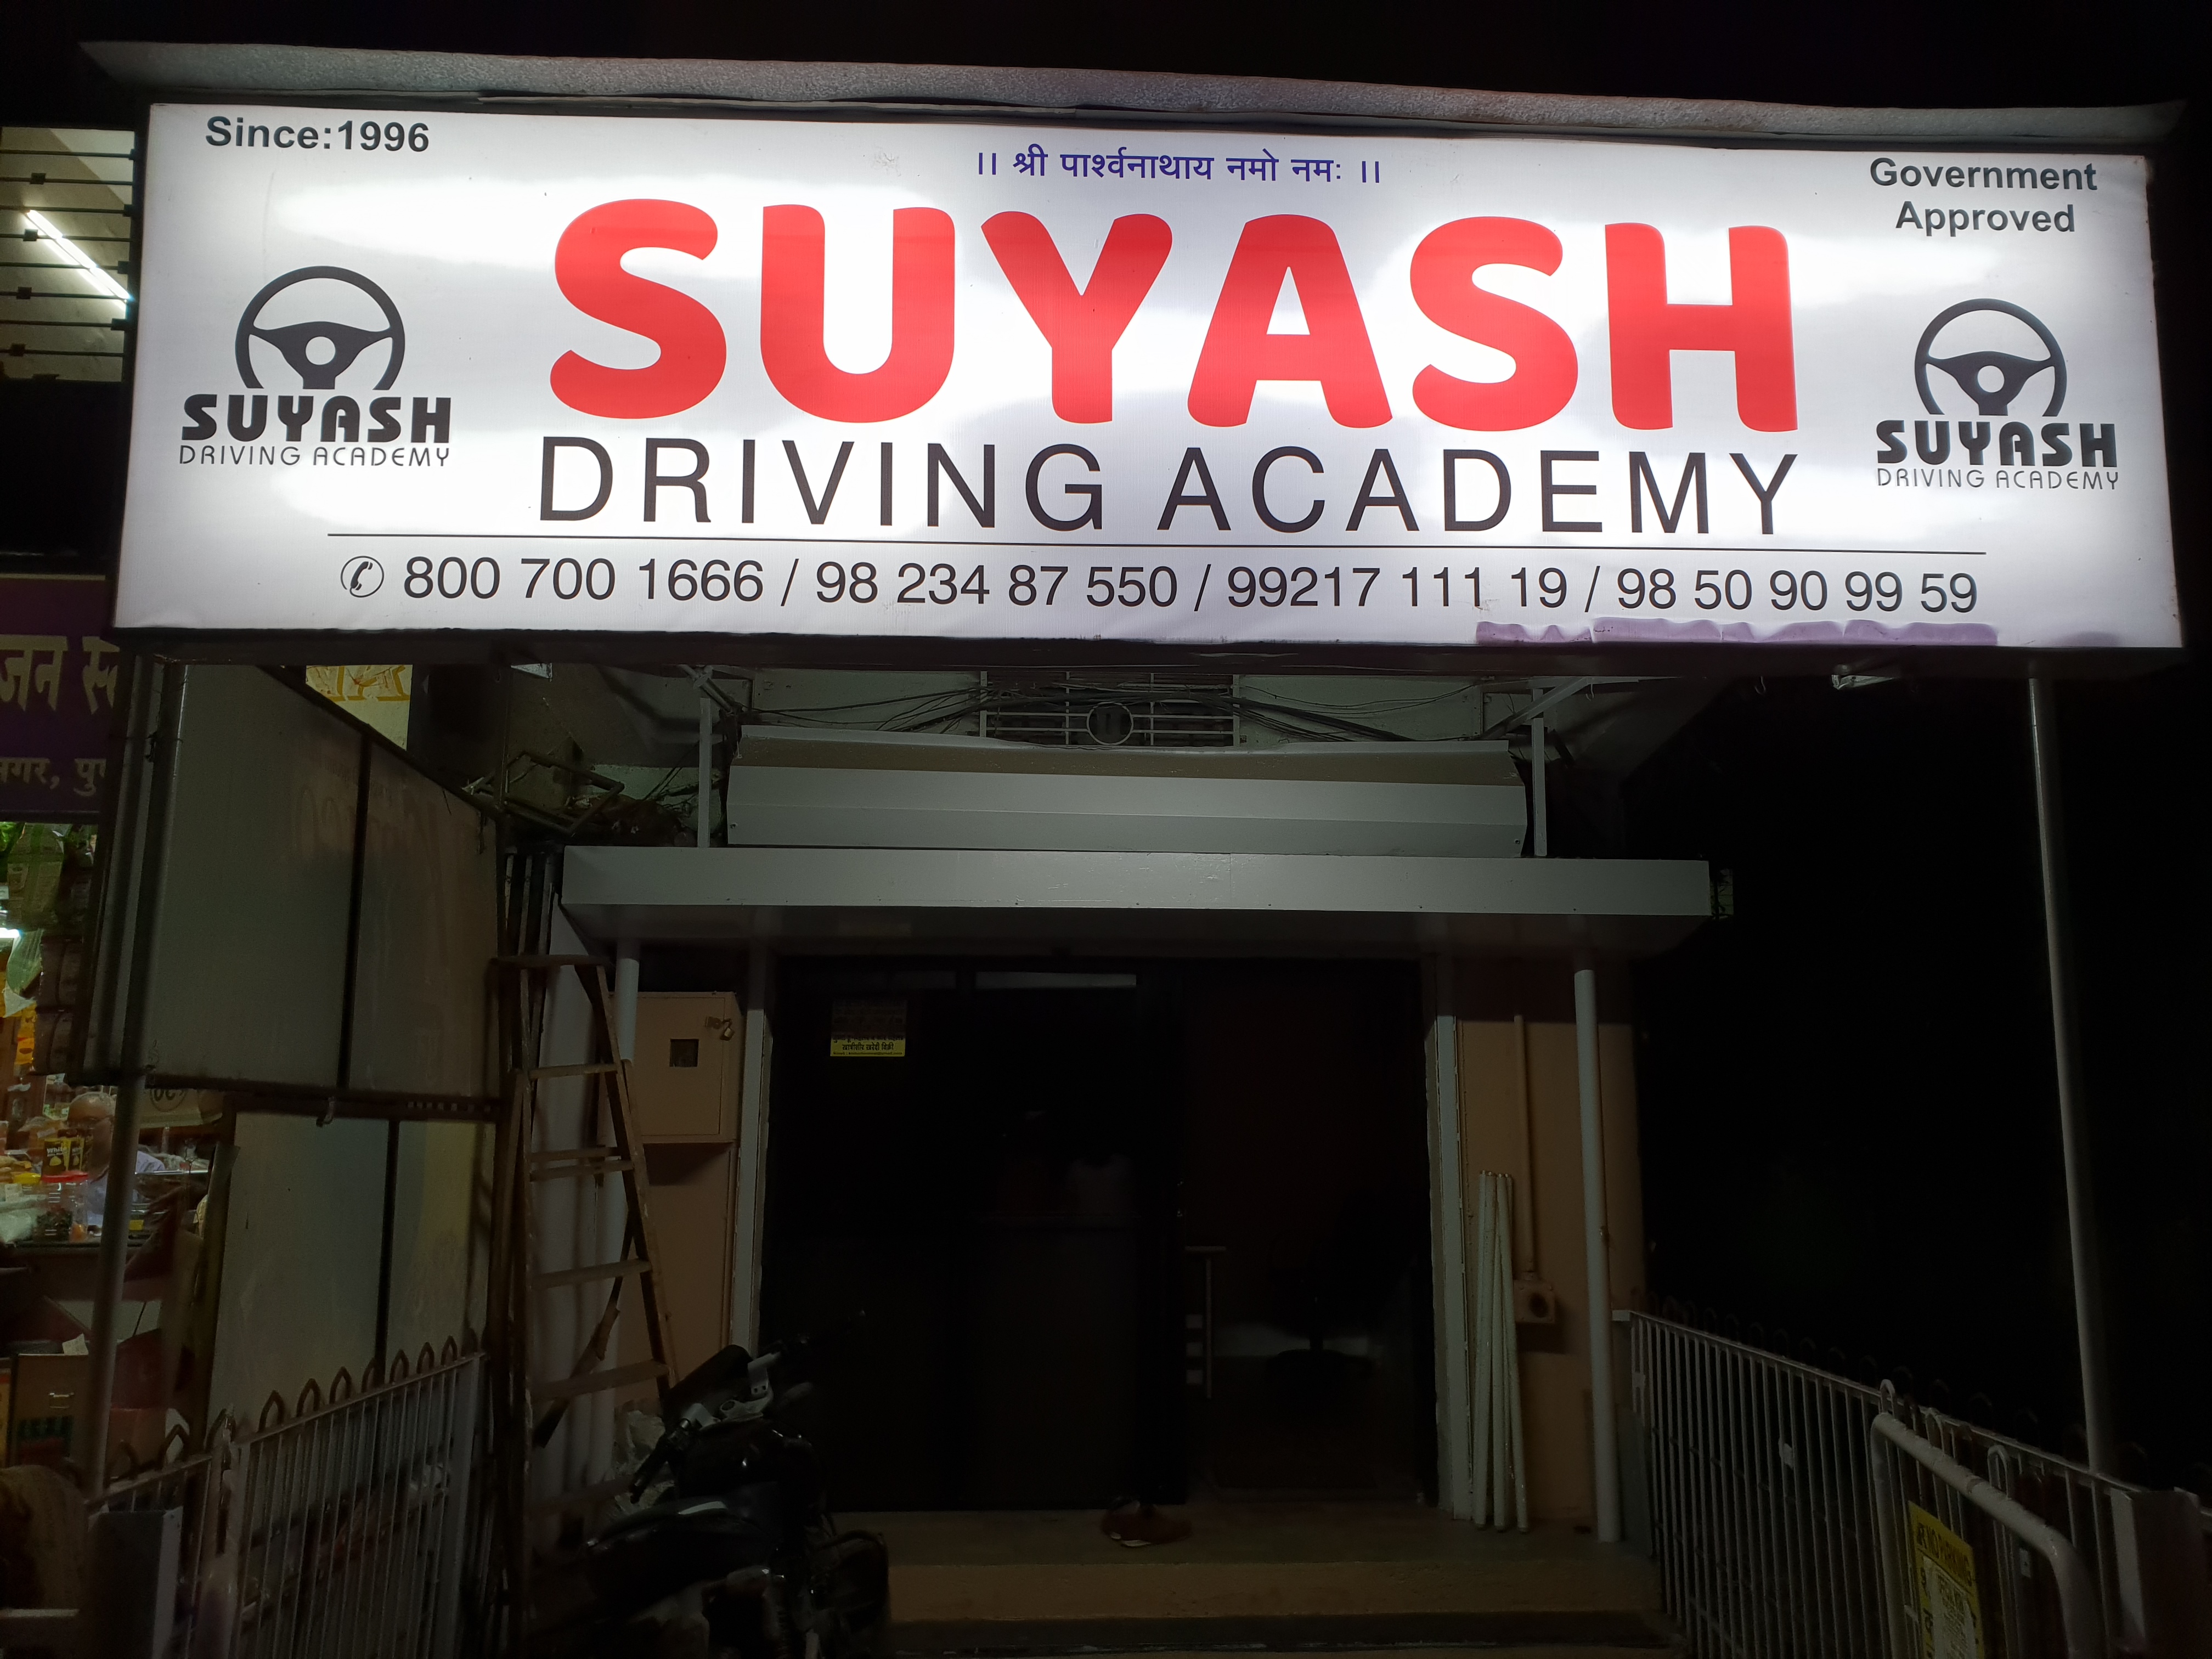 Suyash Driving Academy